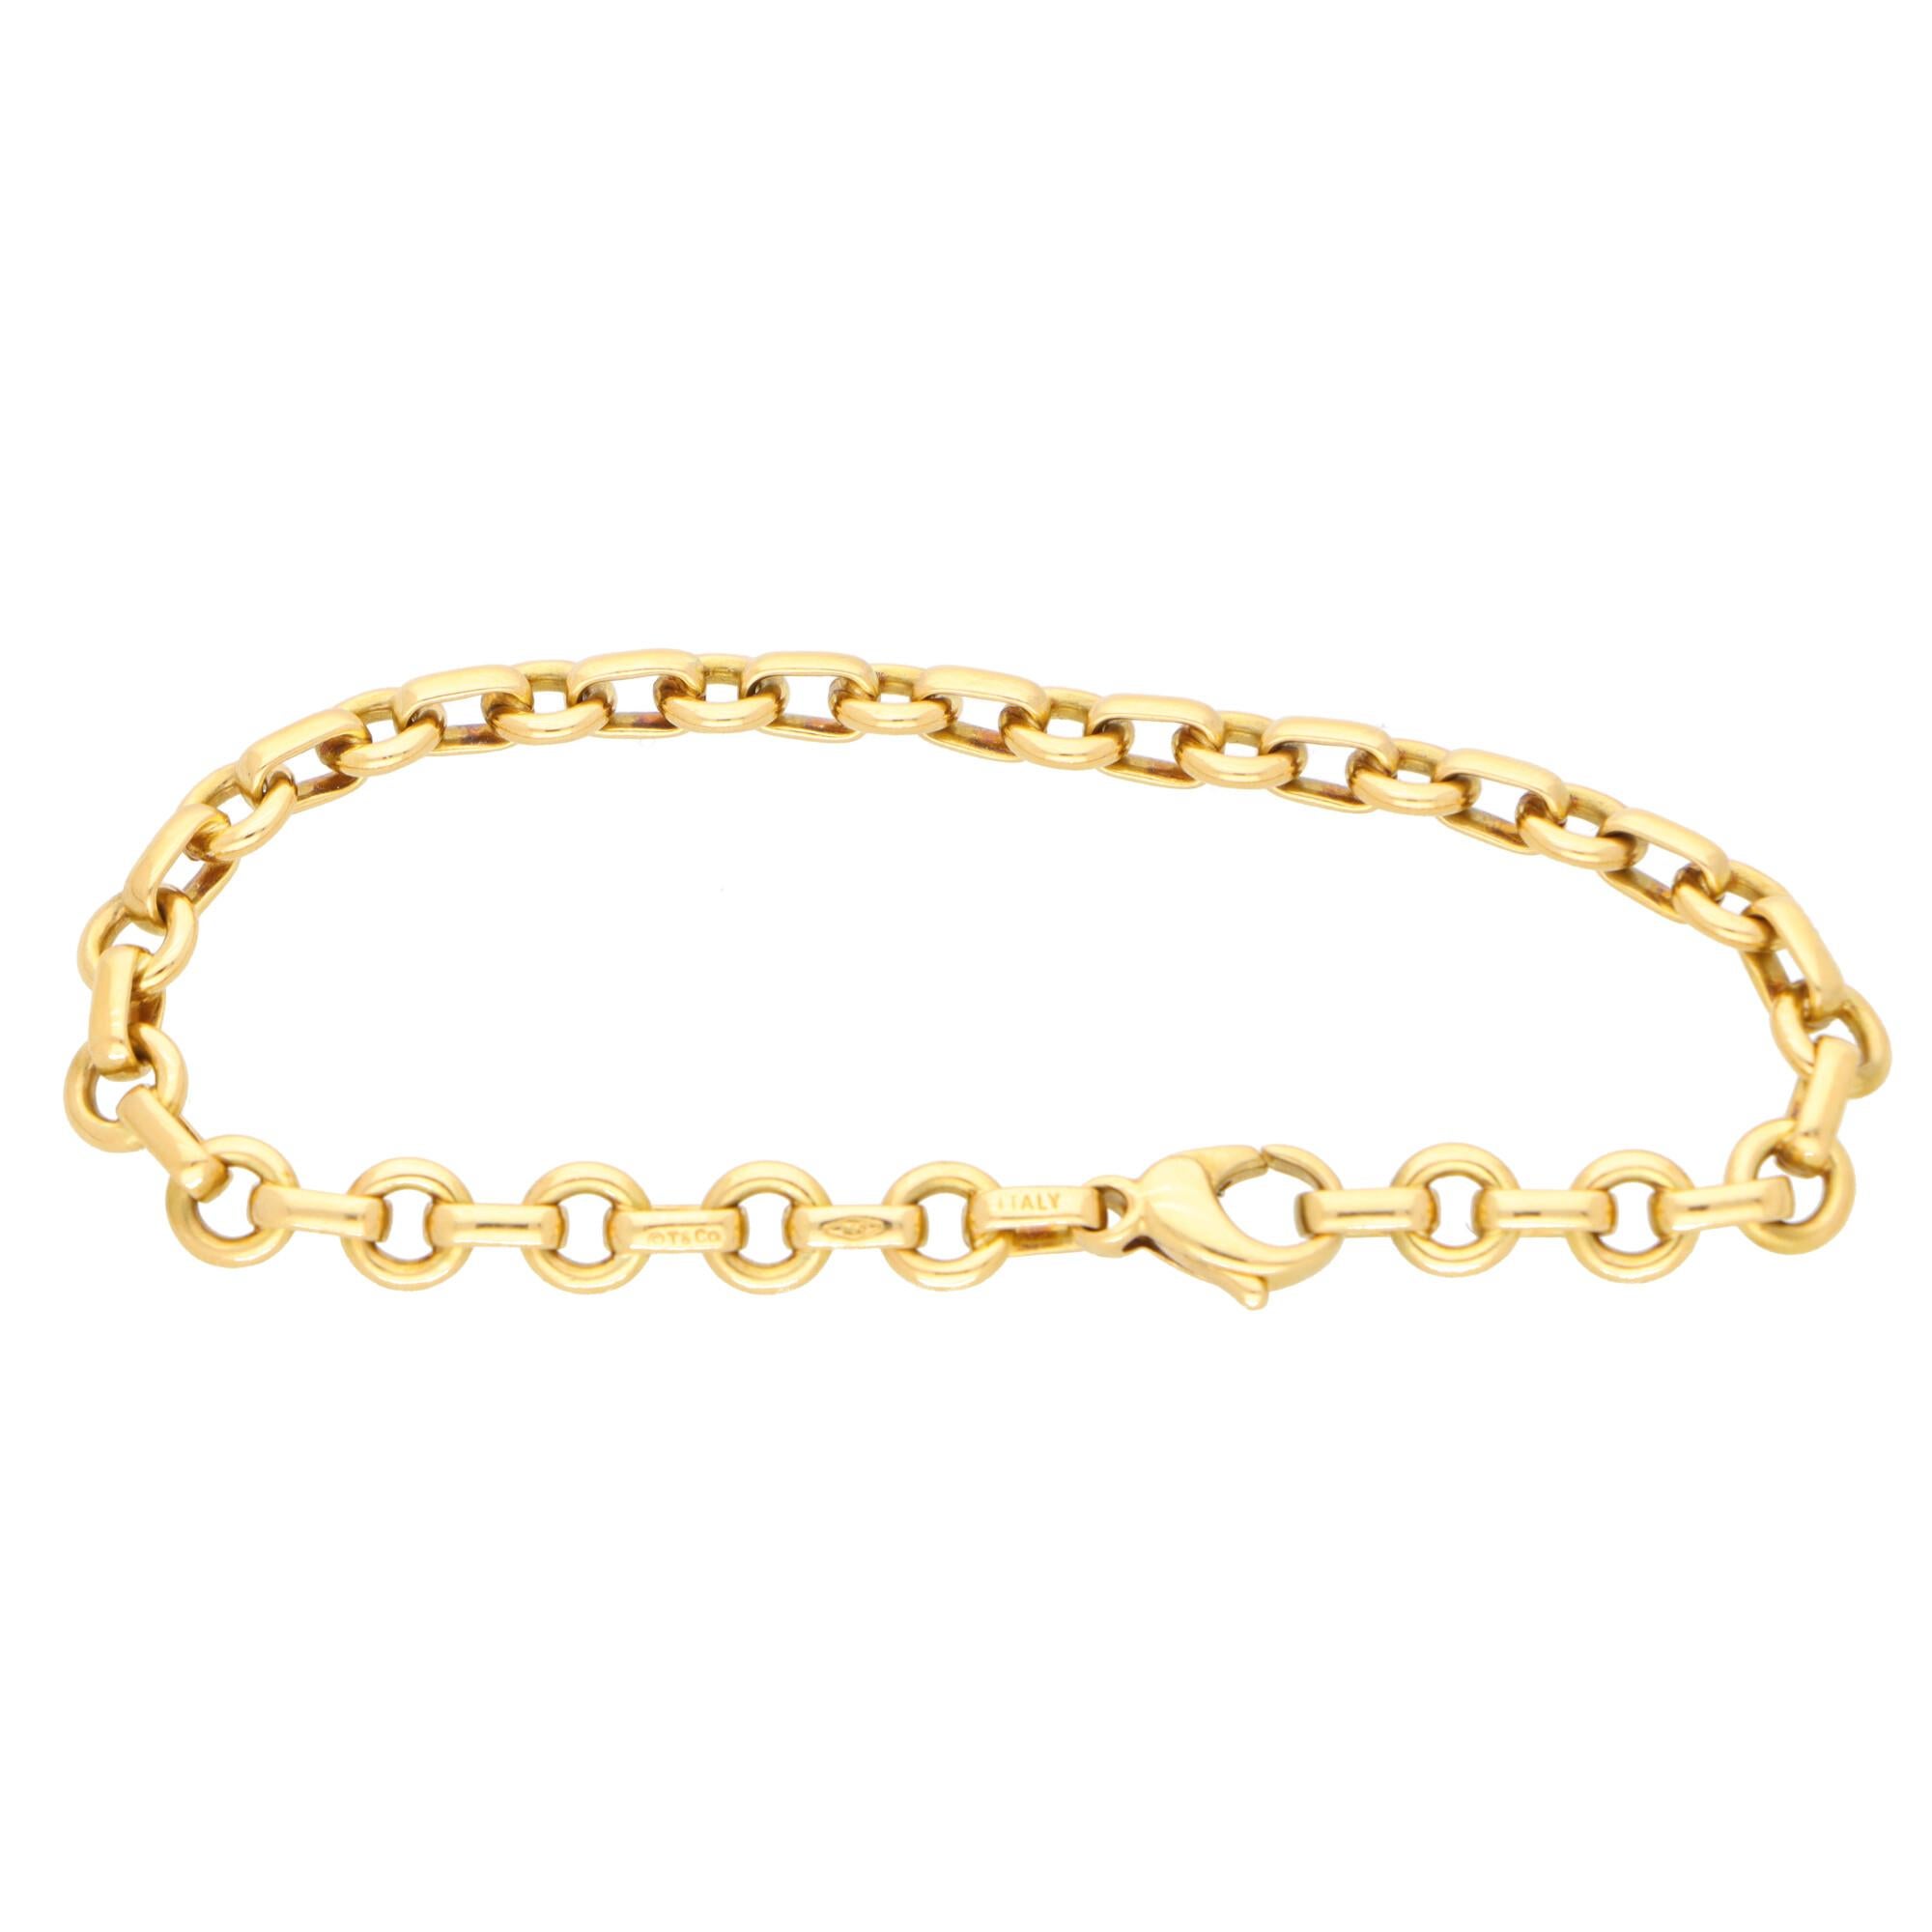 Vintage Tiffany & Co. Chain Link Bracelet Set in 18k Yellow Gold 1